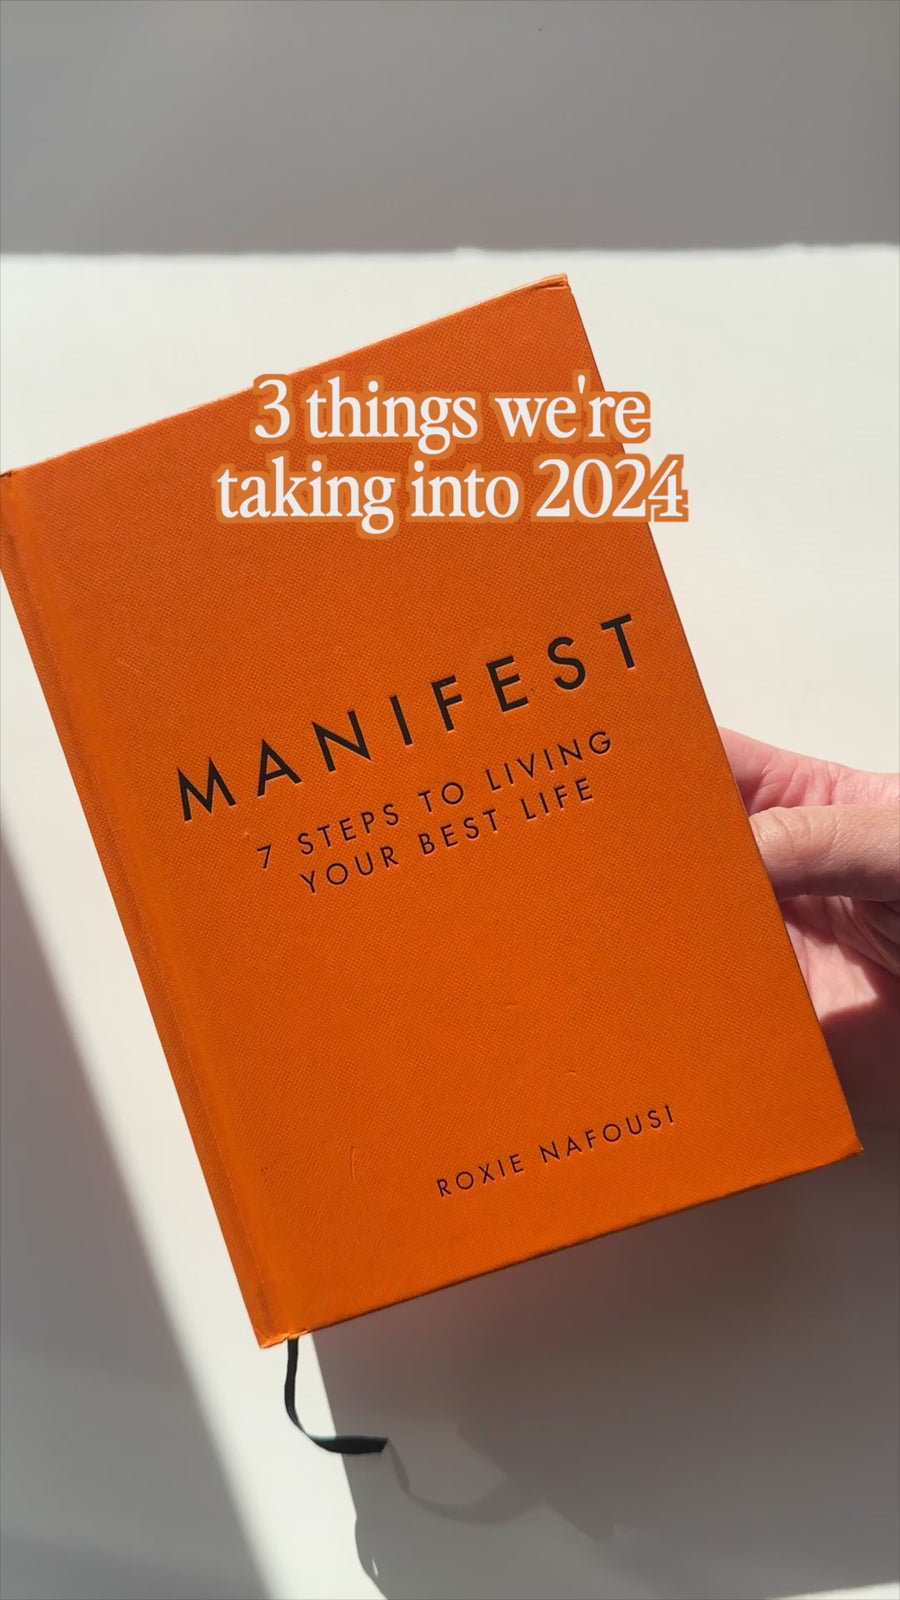 model flipping through manifest book